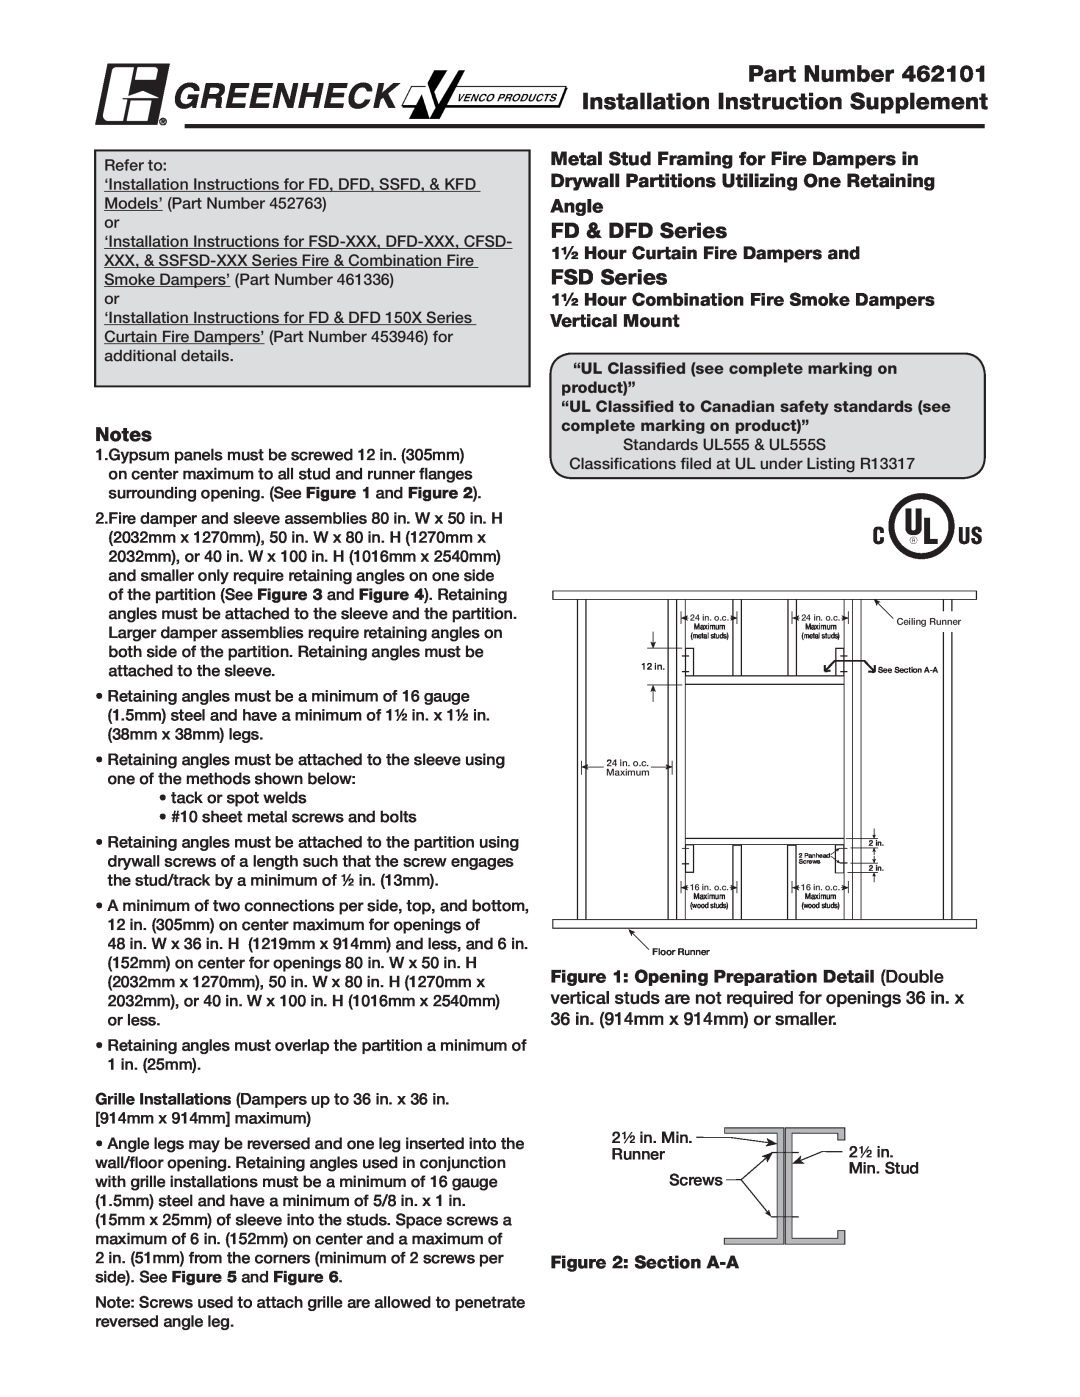 Greenheck Fan KFD installation instructions Part Number 462101 Installation Instruction Supplement, FD & DFD Series, Angle 